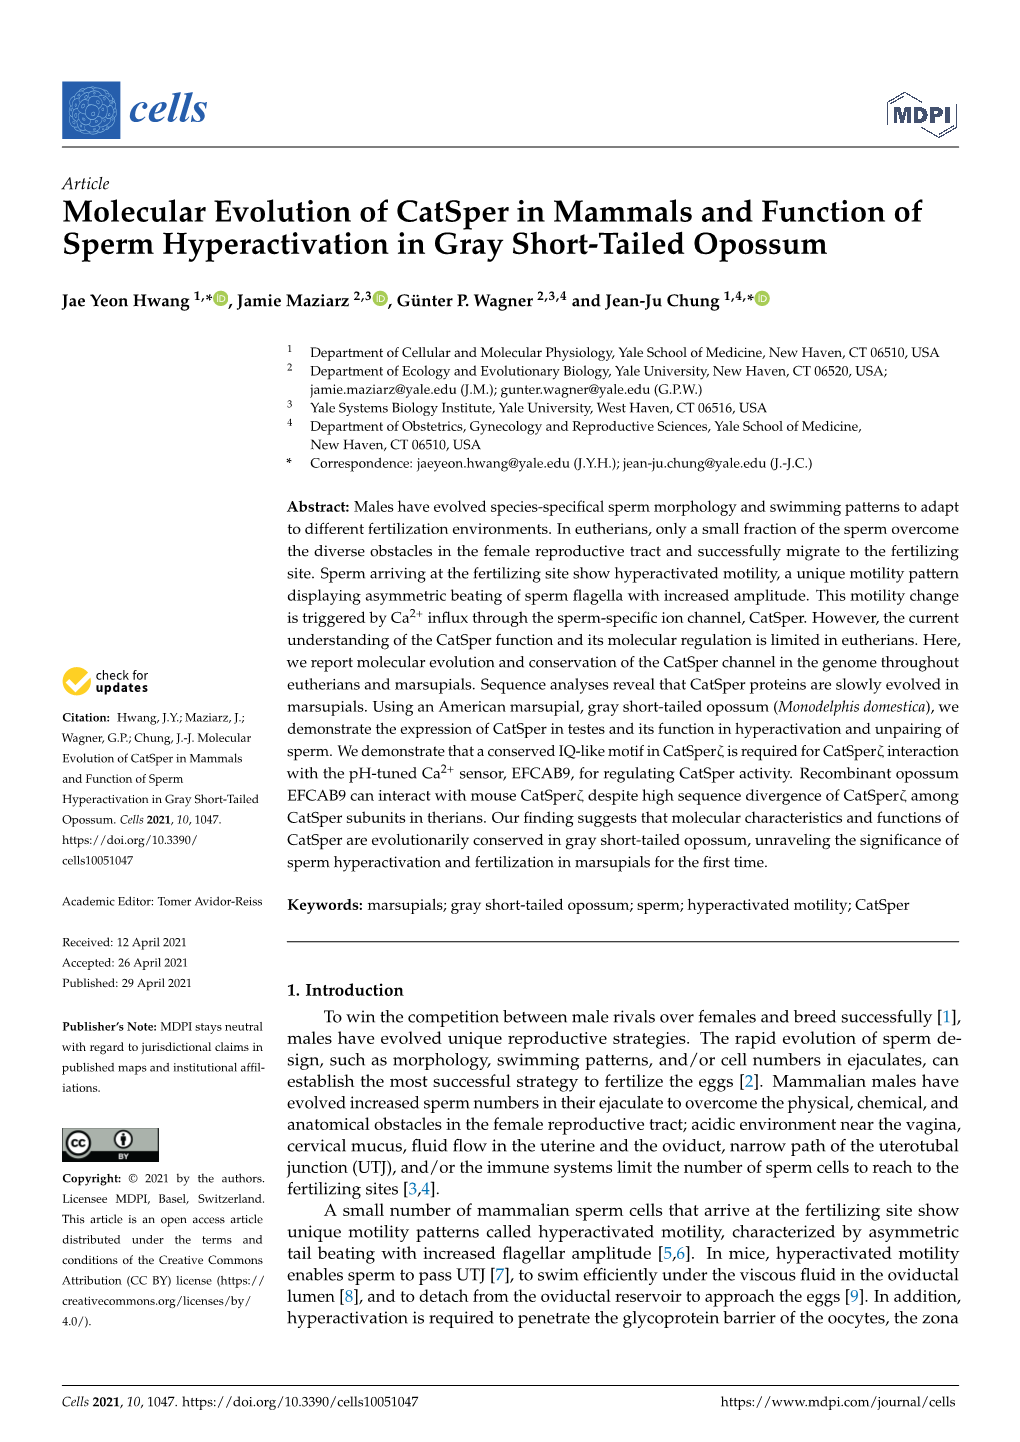 Molecular Evolution of Catsper in Mammals and Function of Sperm Hyperactivation in Gray Short-Tailed Opossum